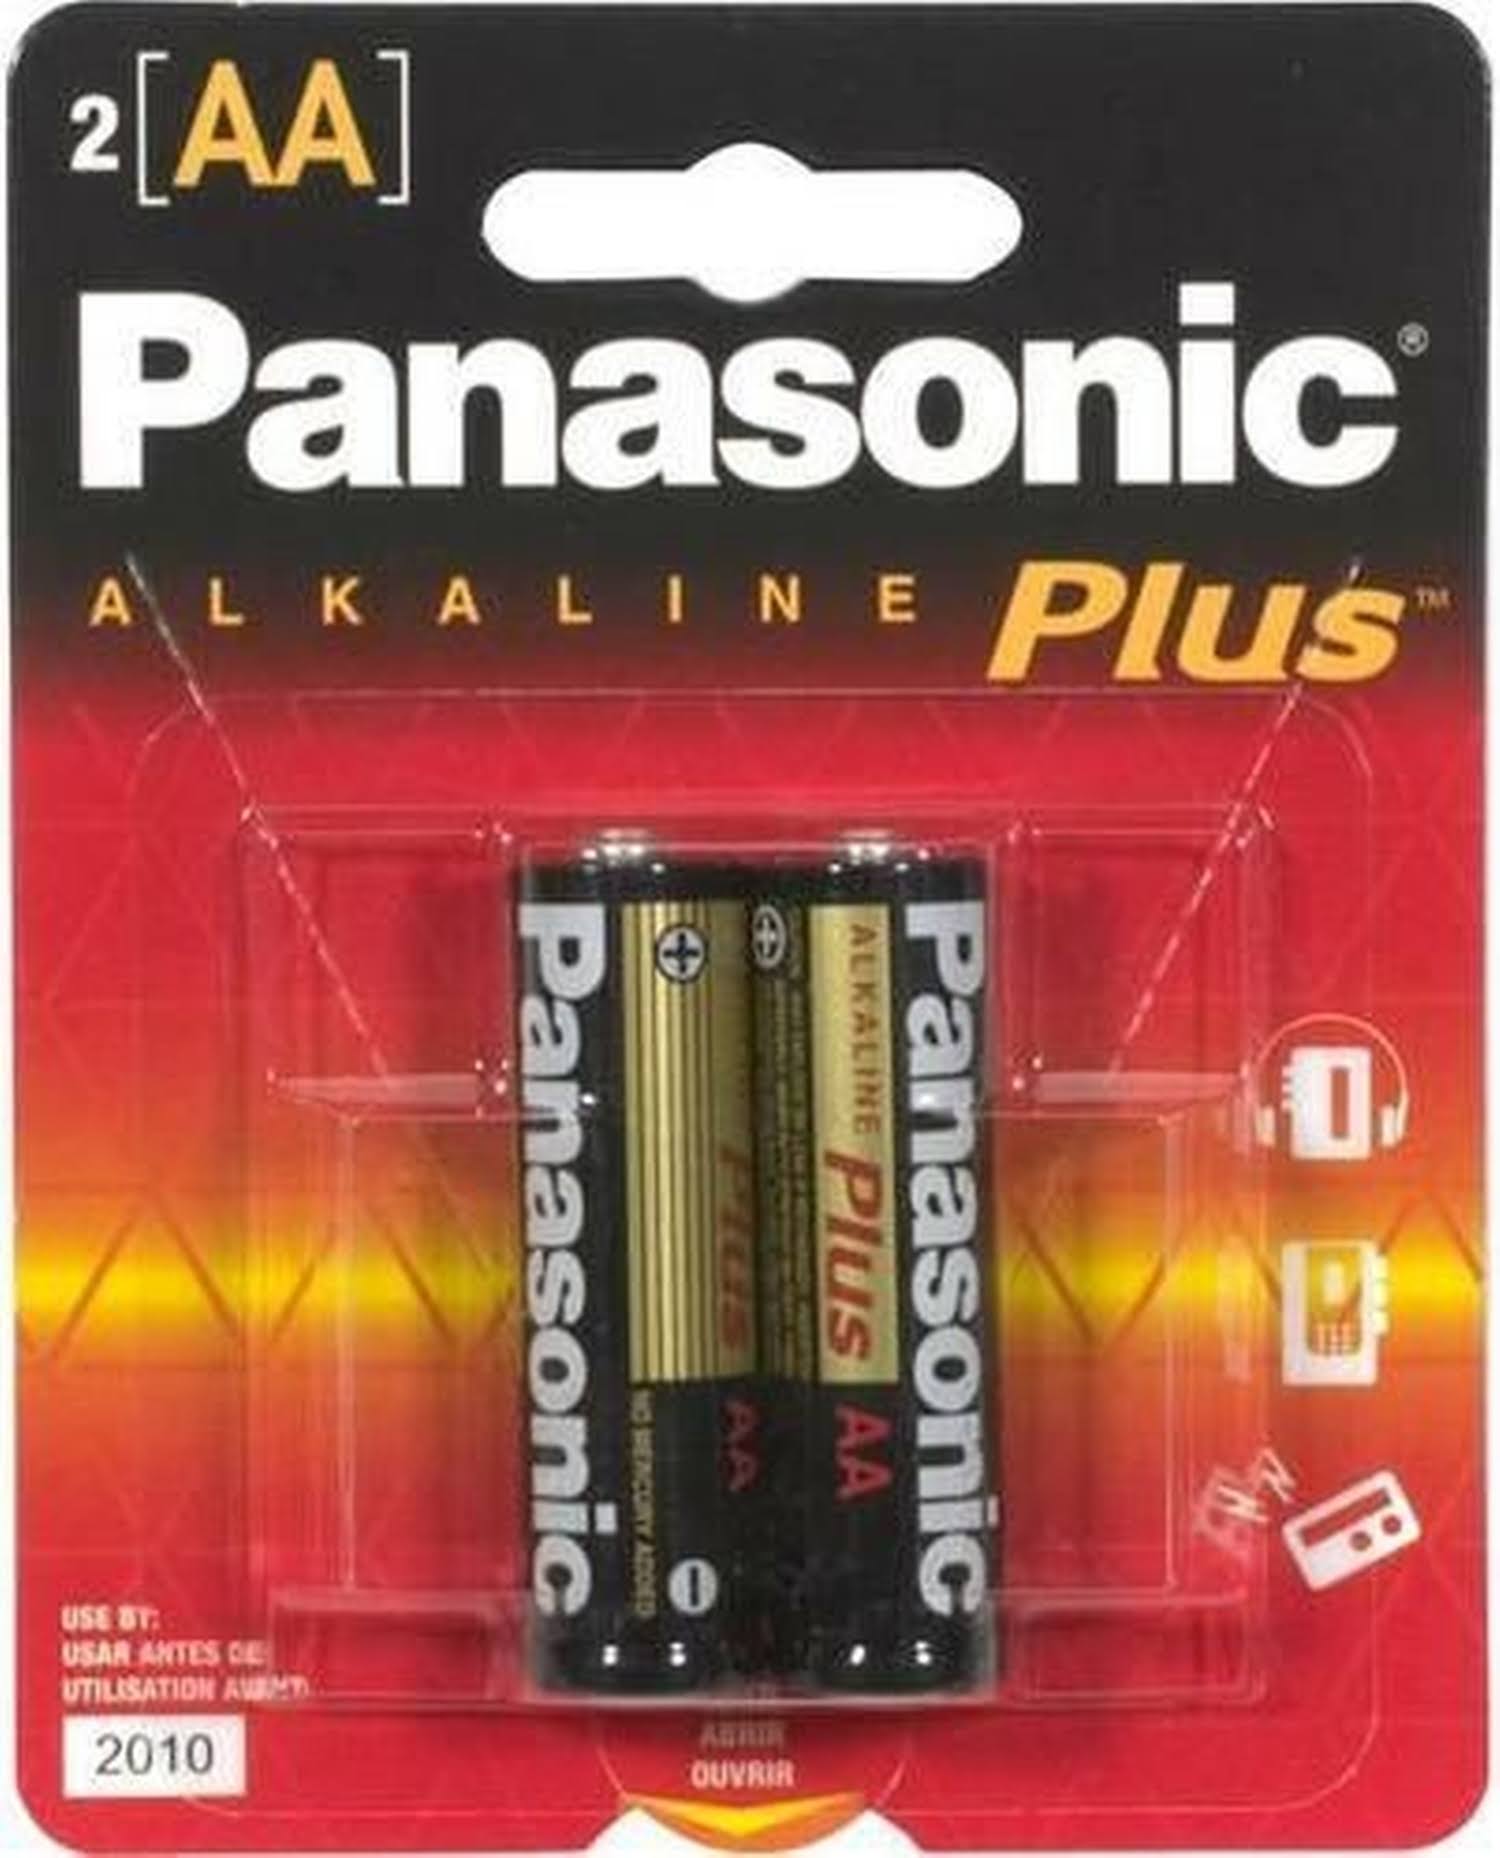 Panasonic Alkaline Plus Battery - AA, x2